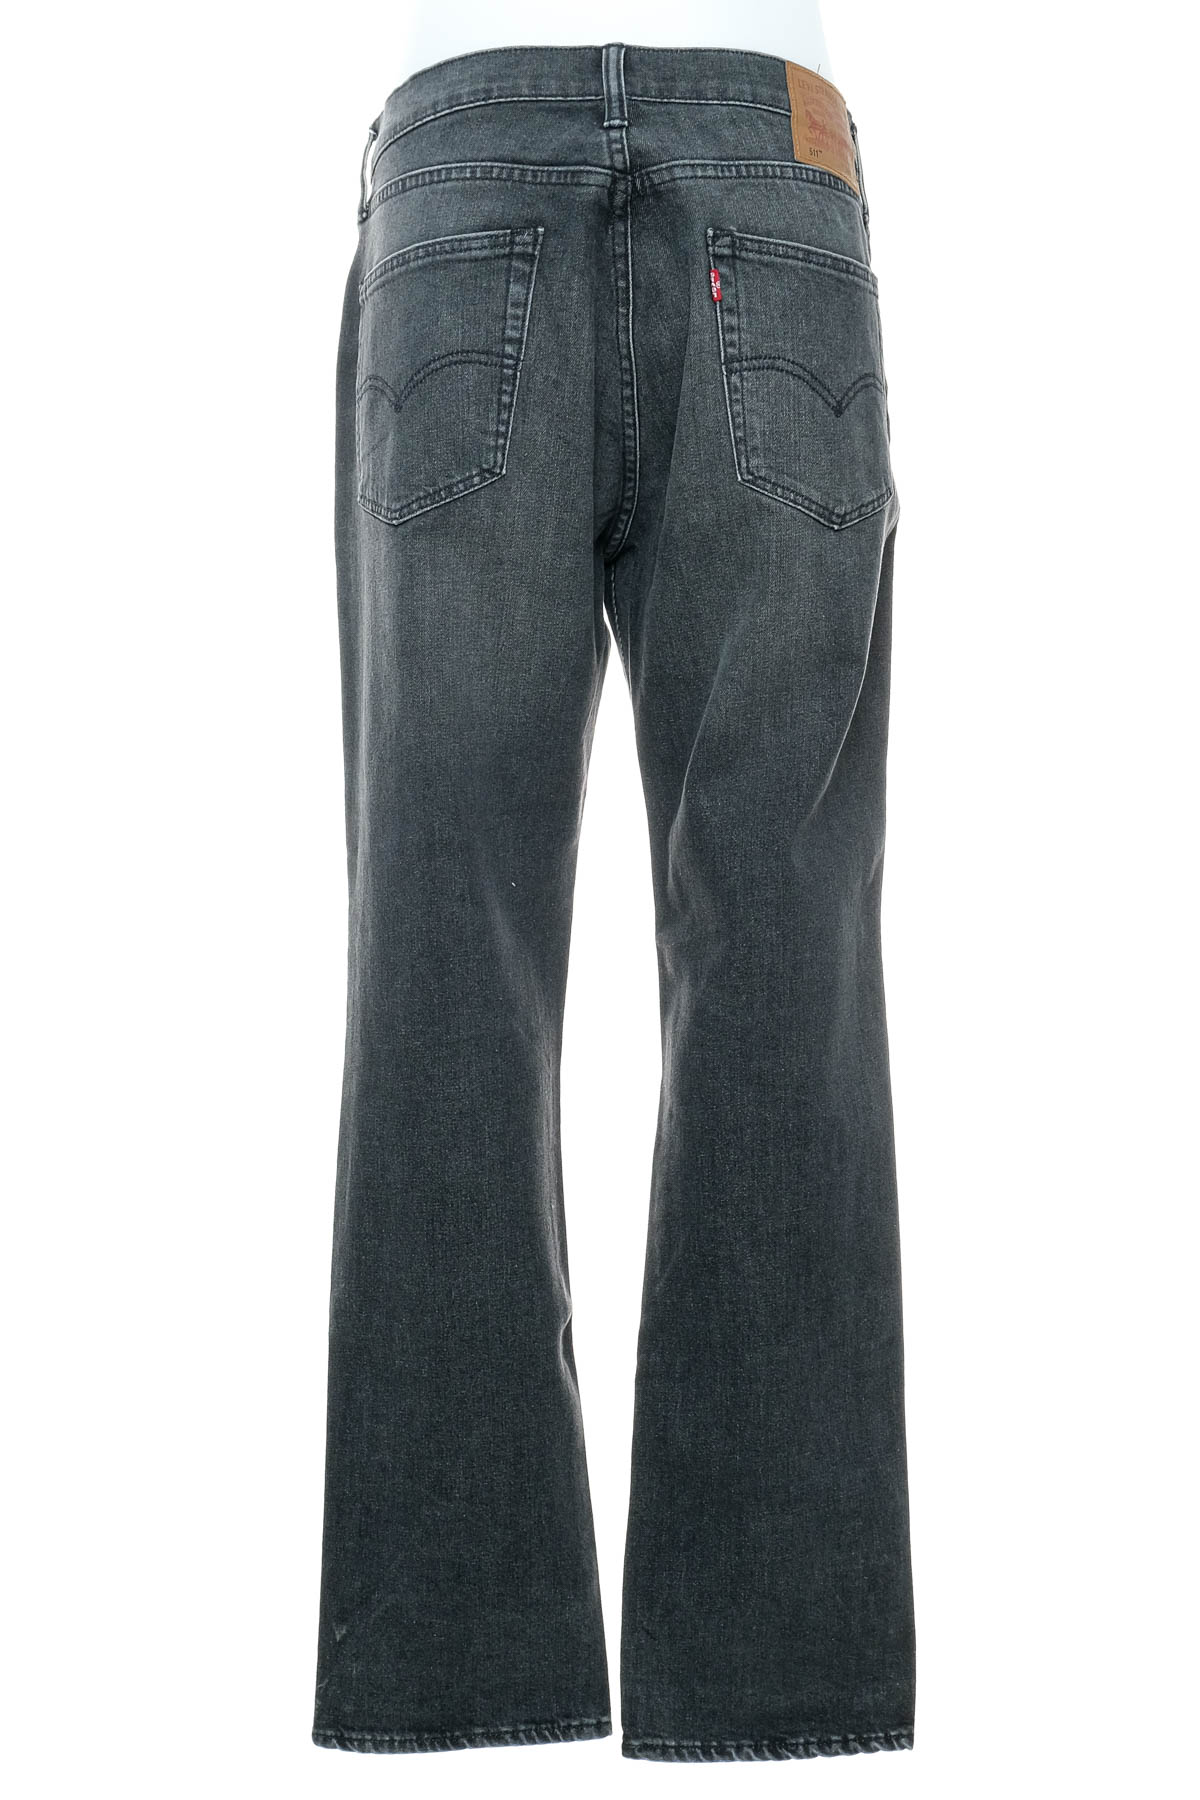 Men's jeans - Levi Strauss & Co. - 1